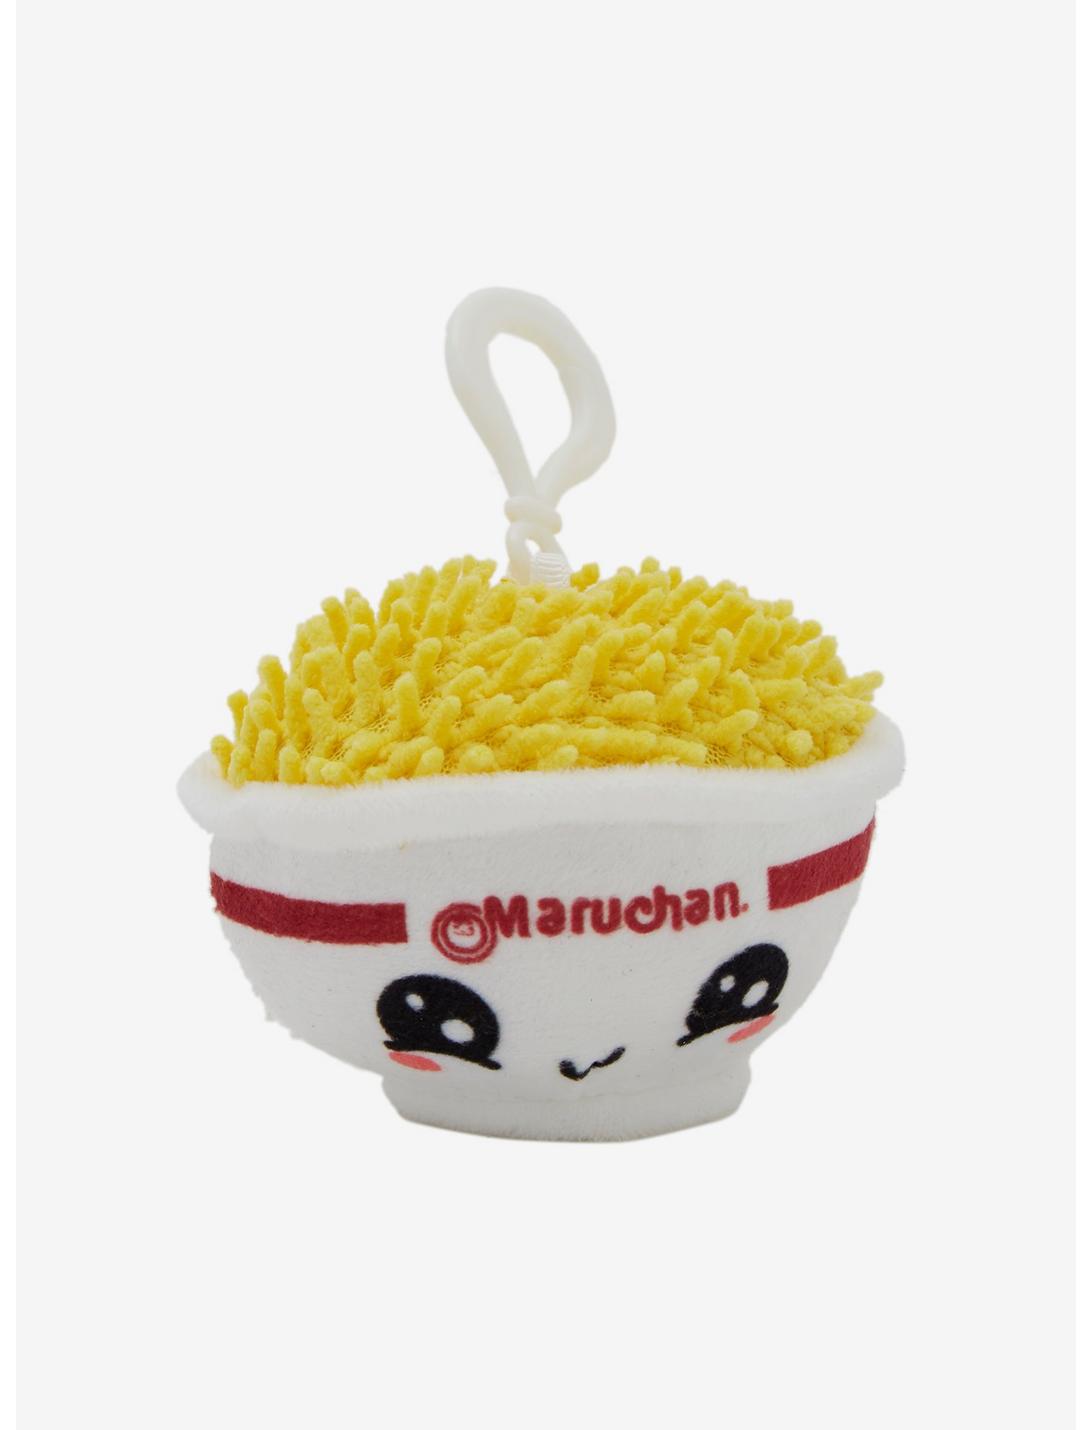 Maruchan Noodle Bowl 3 Inch Plush Keychain, , hi-res